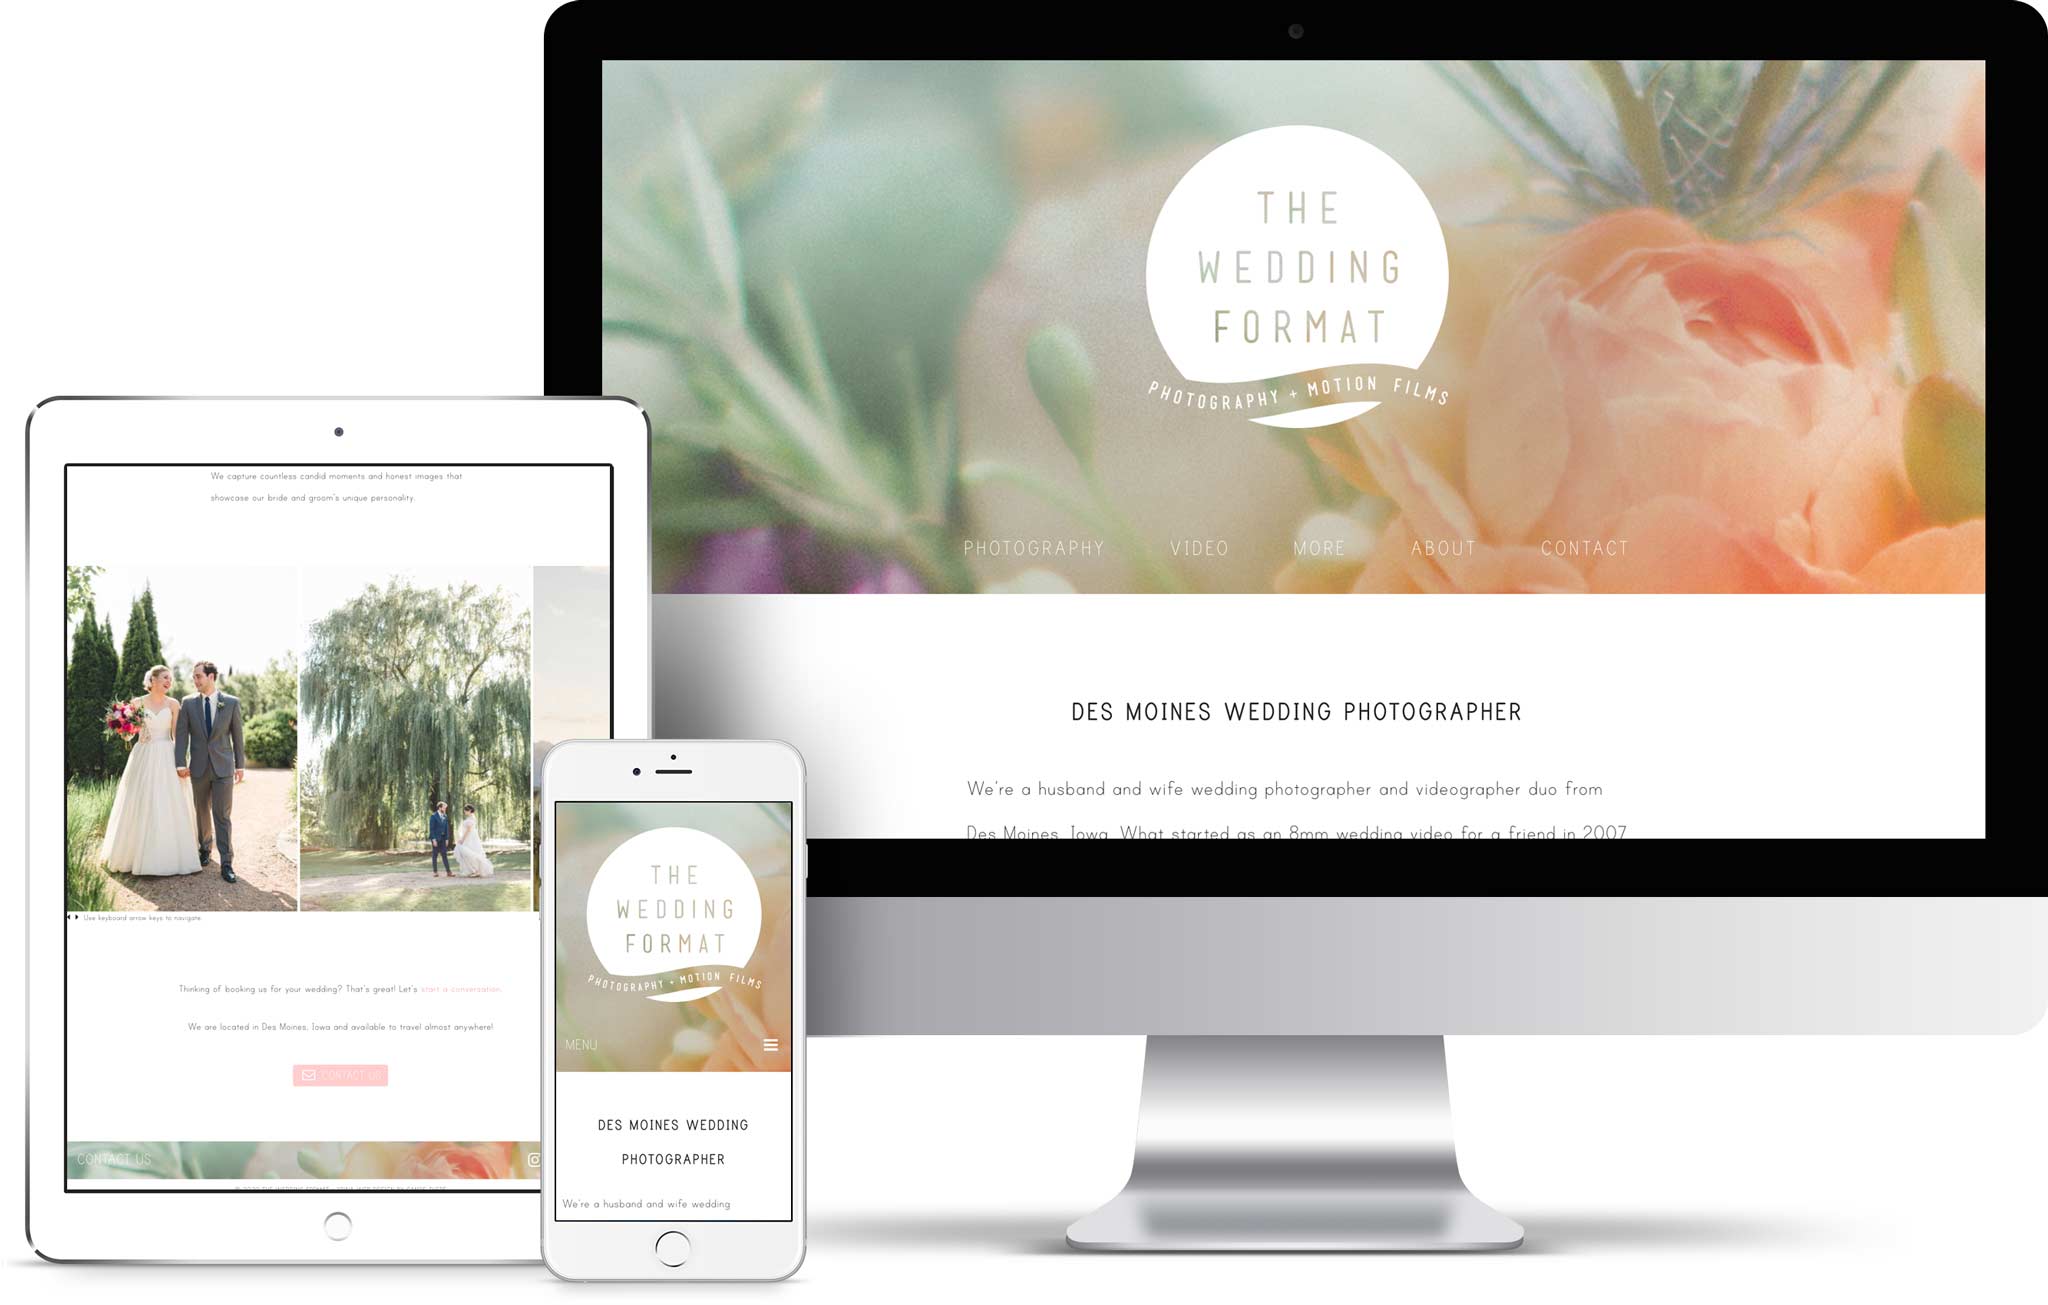 The Wedding Format website design